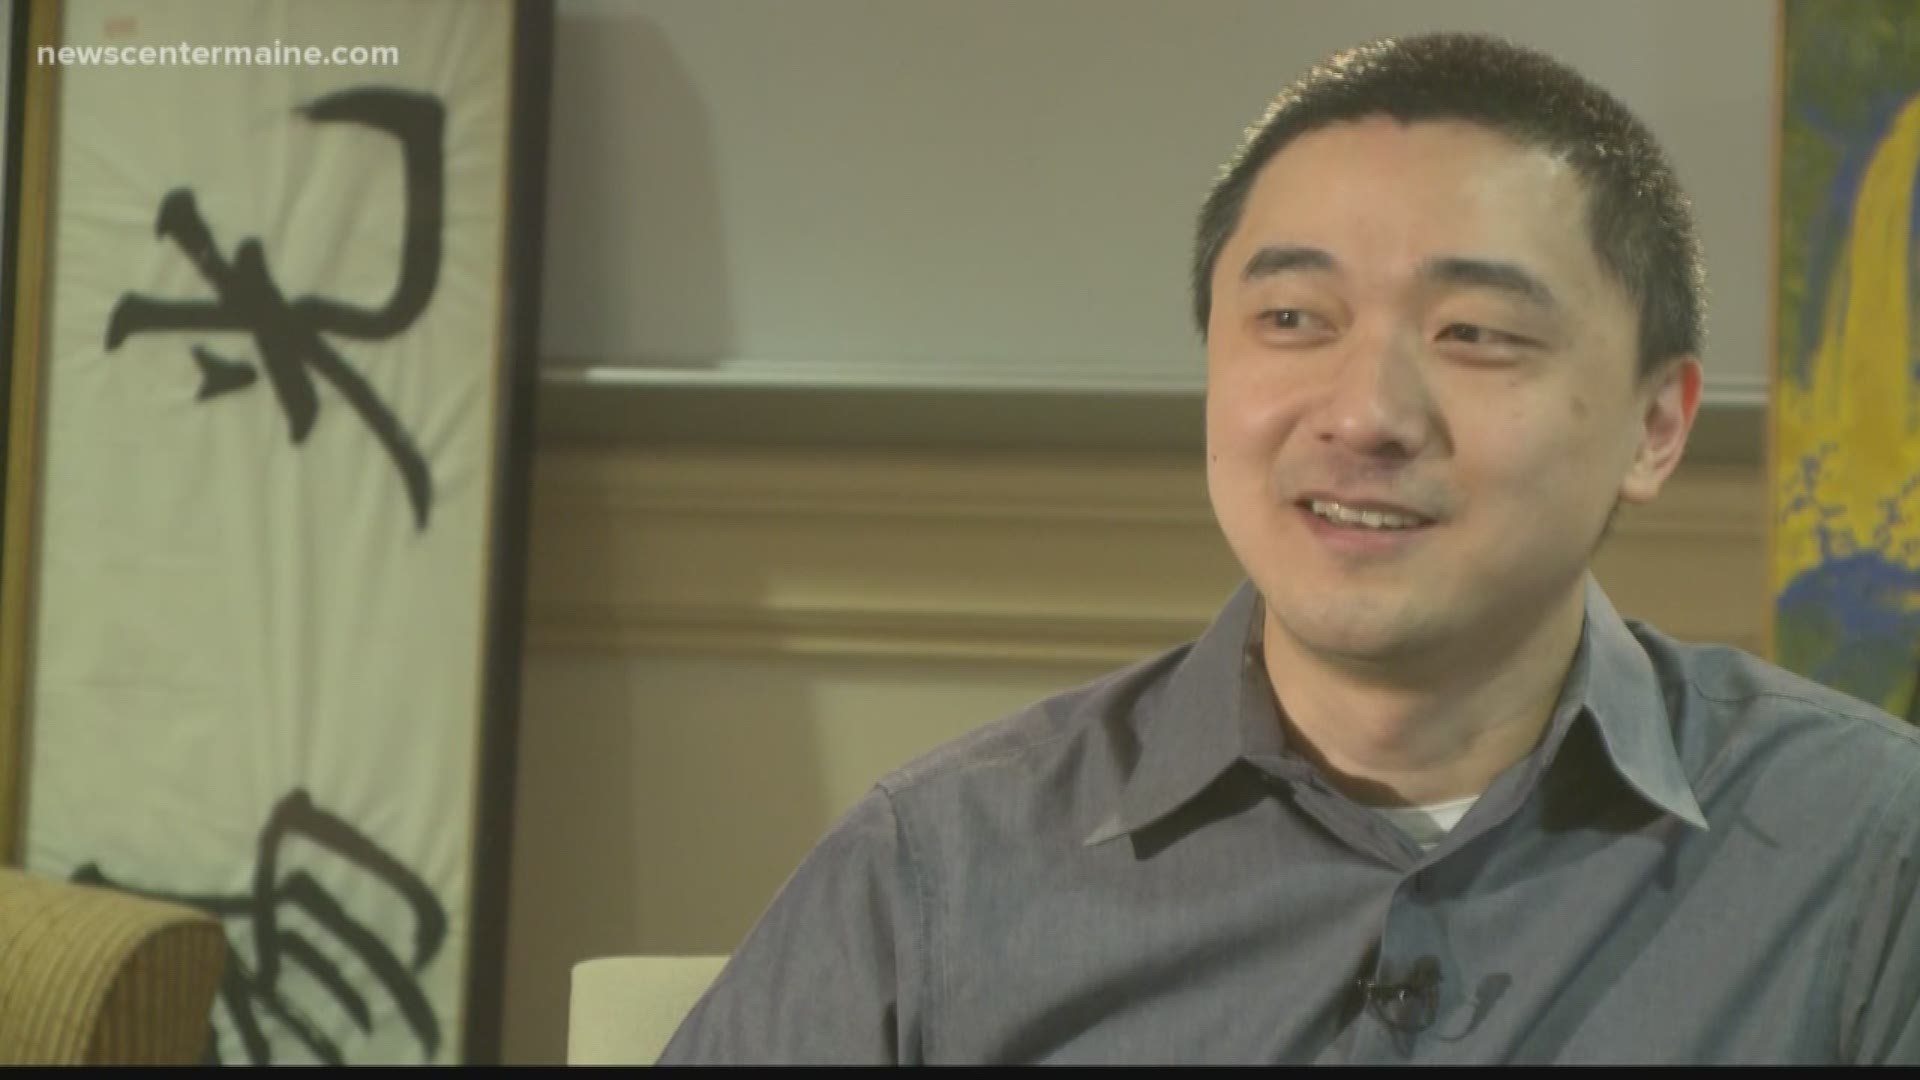 Award-winning writer Ken Liu doesn't worry about awards